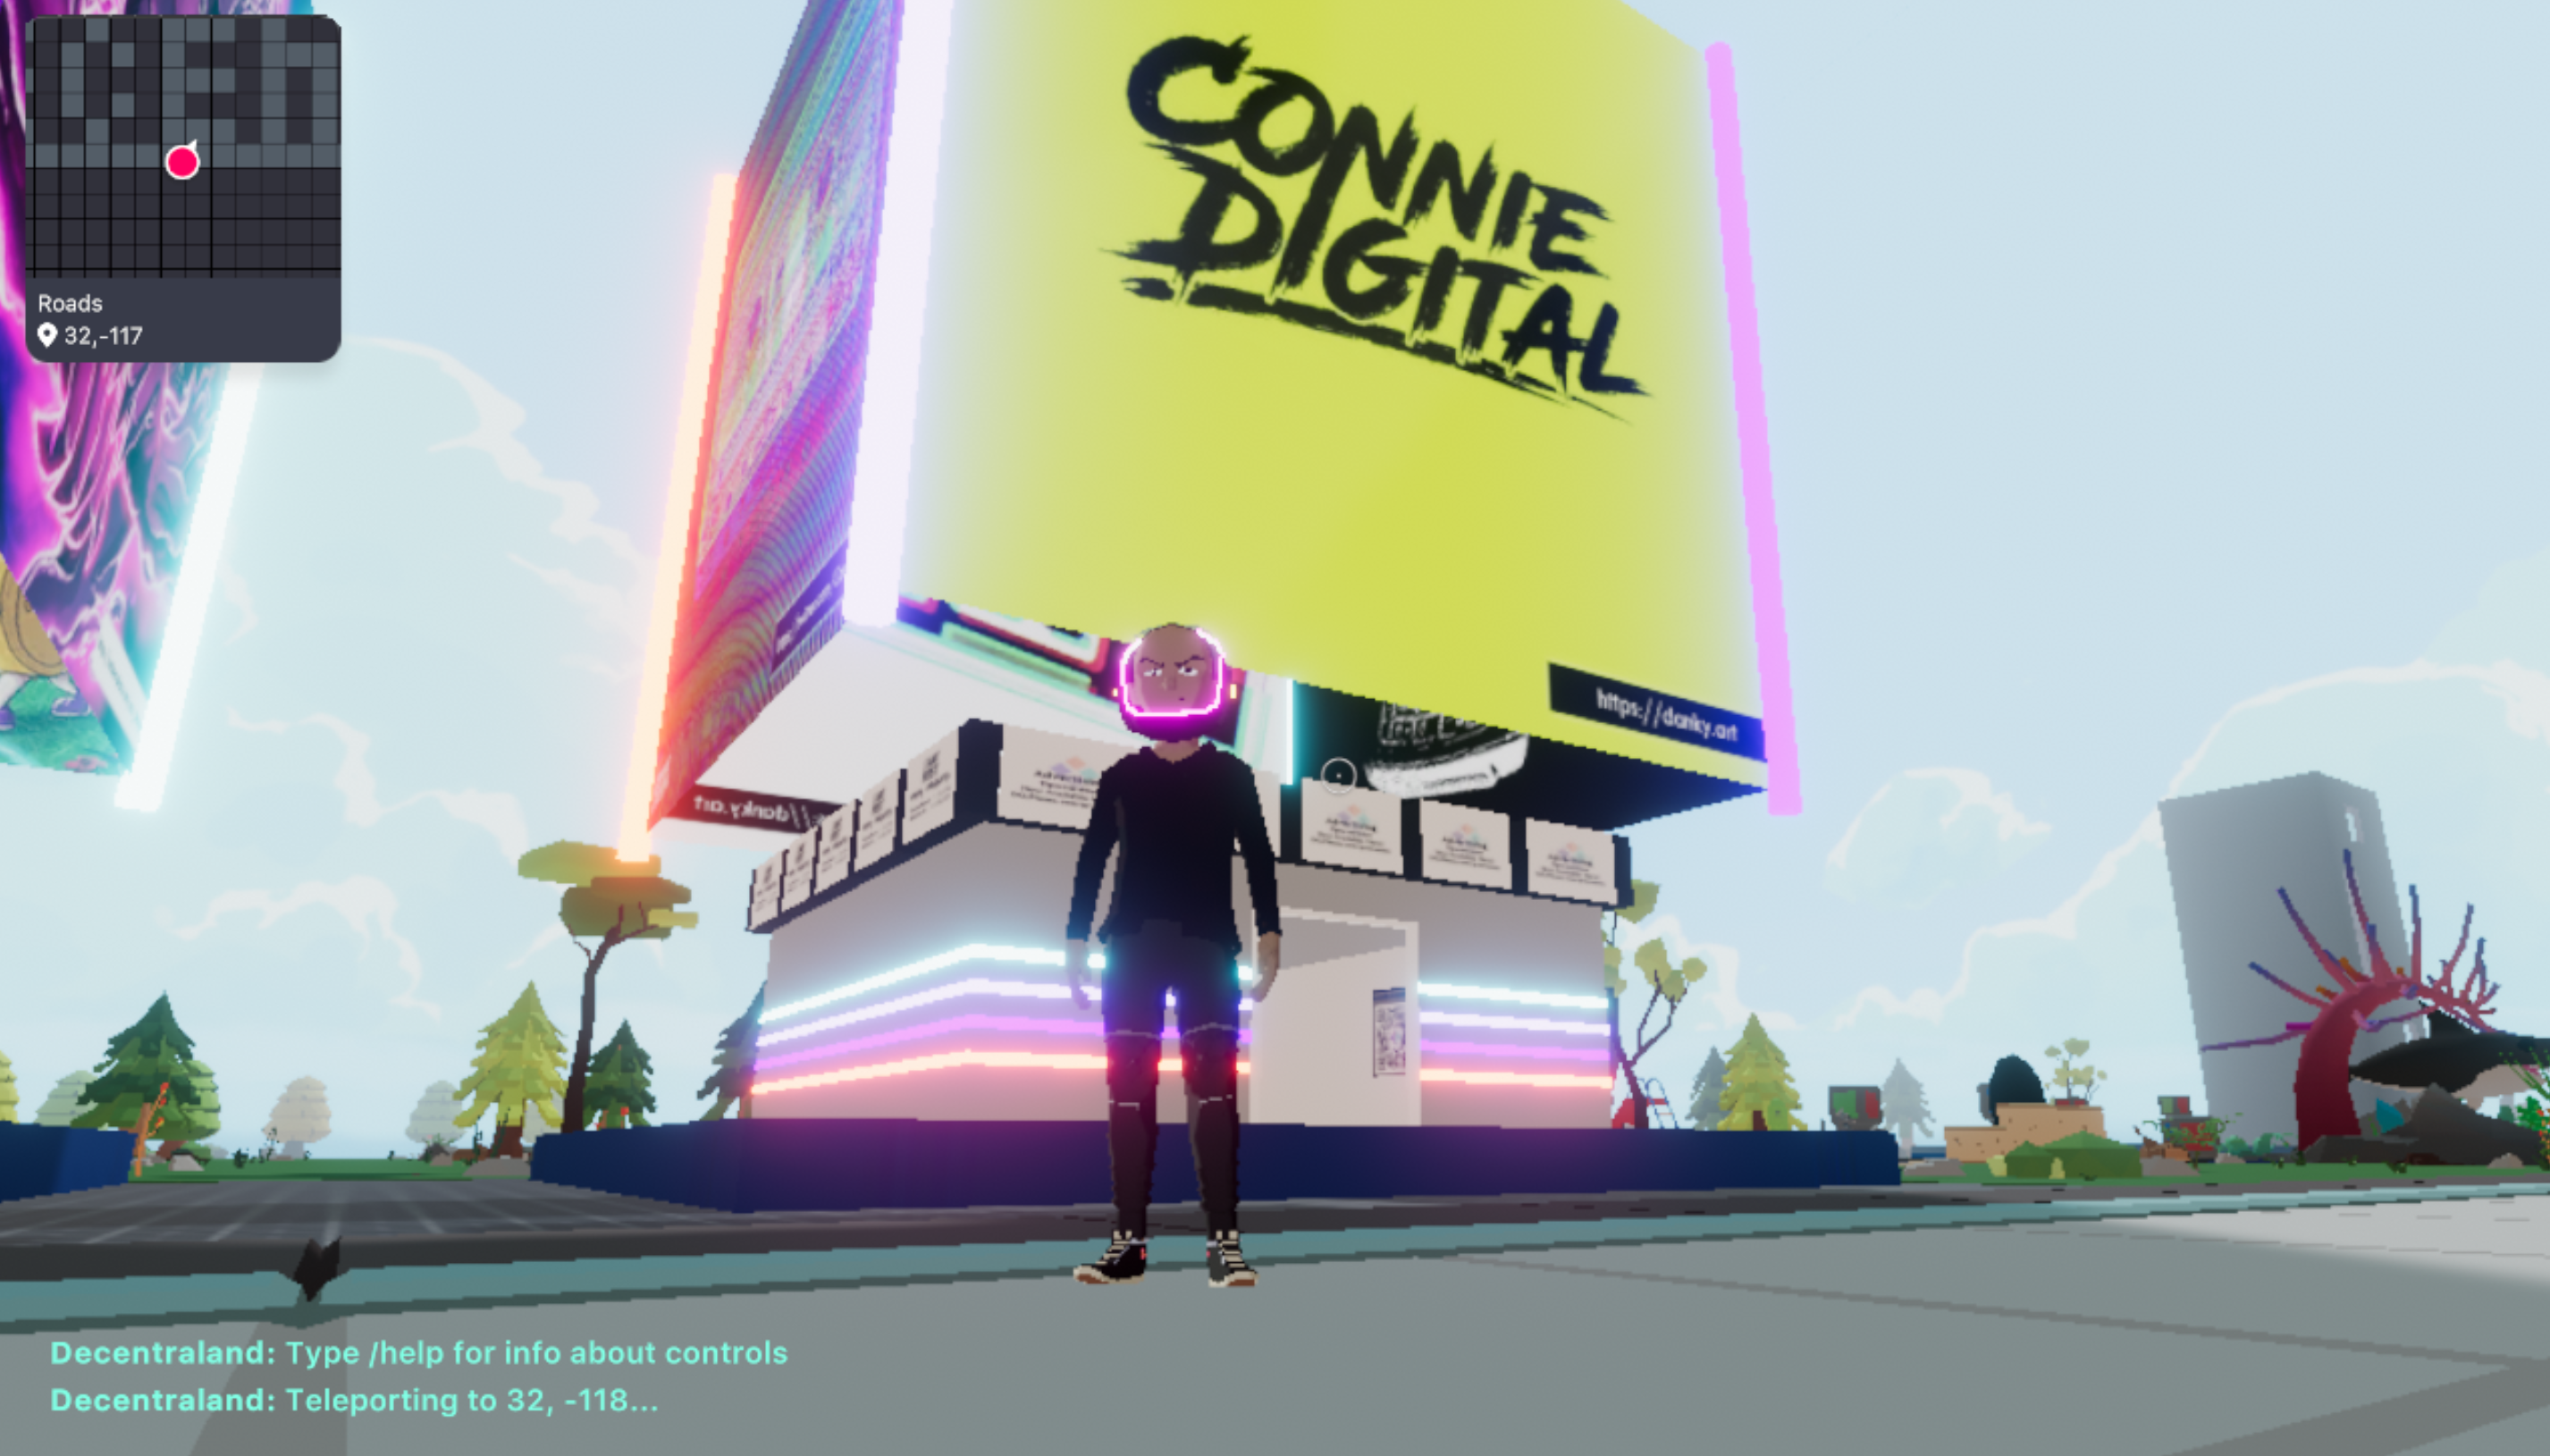 Connie Digital in Decentraland Blockchain VR